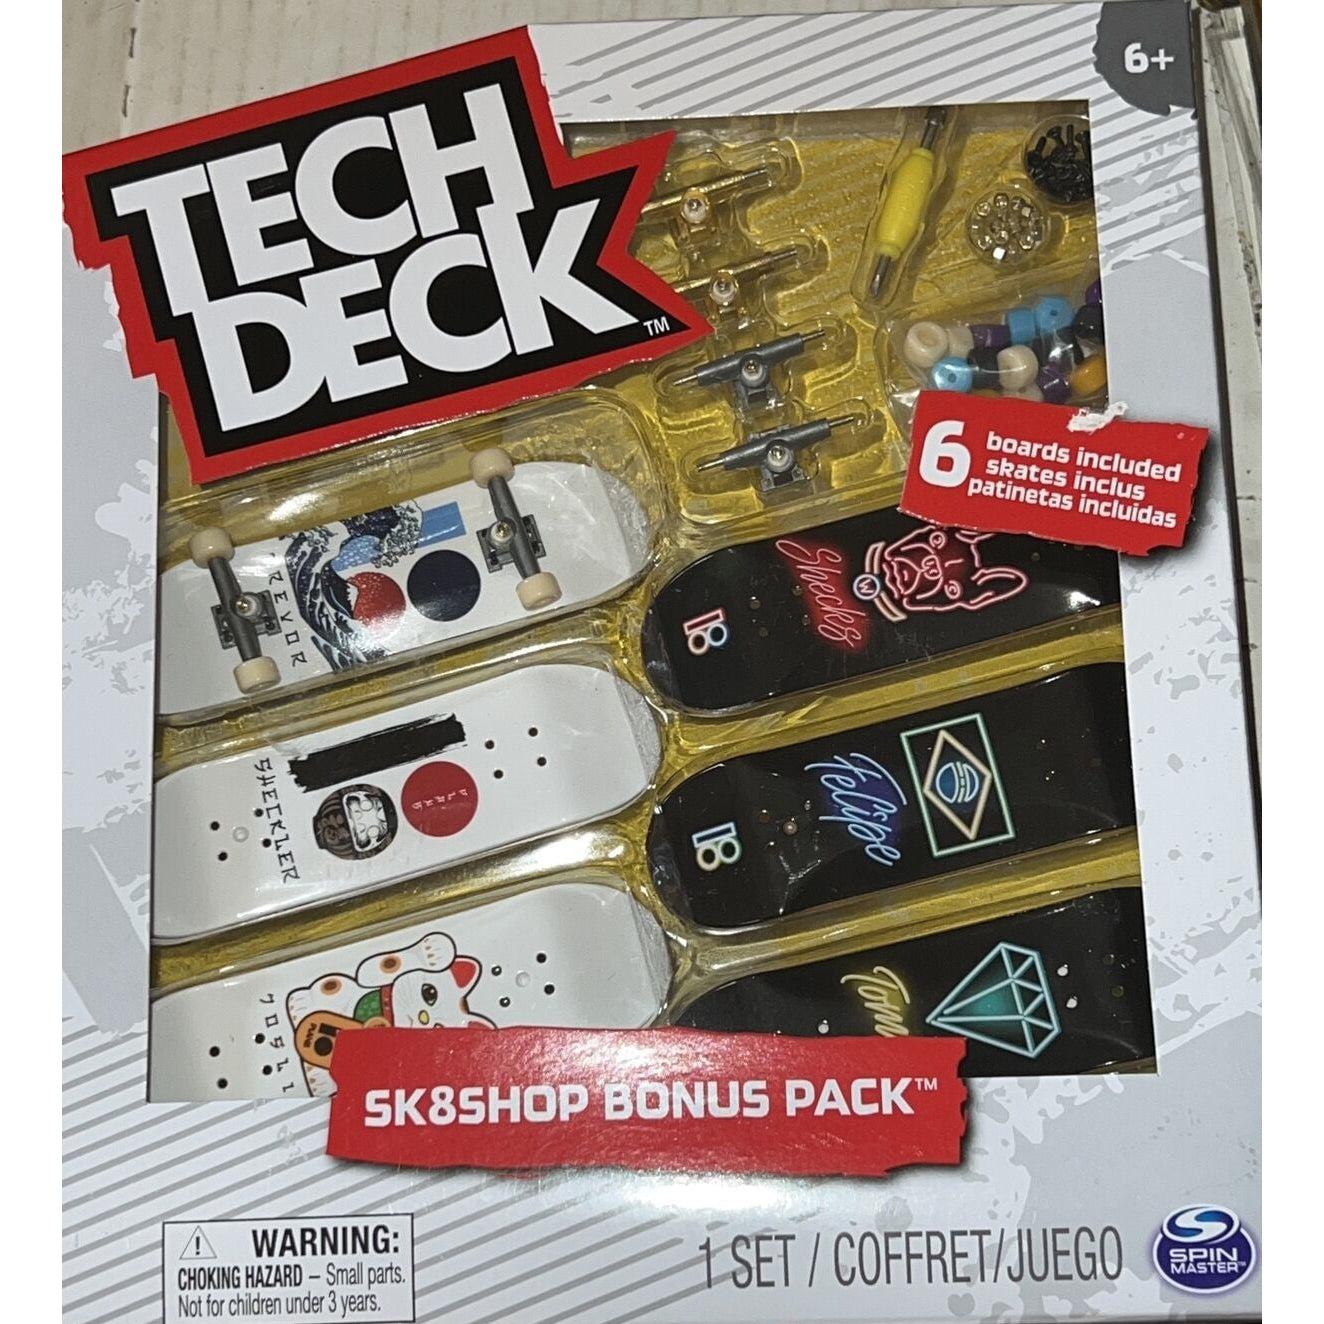 Tech Deck Ultra DLX 4 Pack – kiddywampus